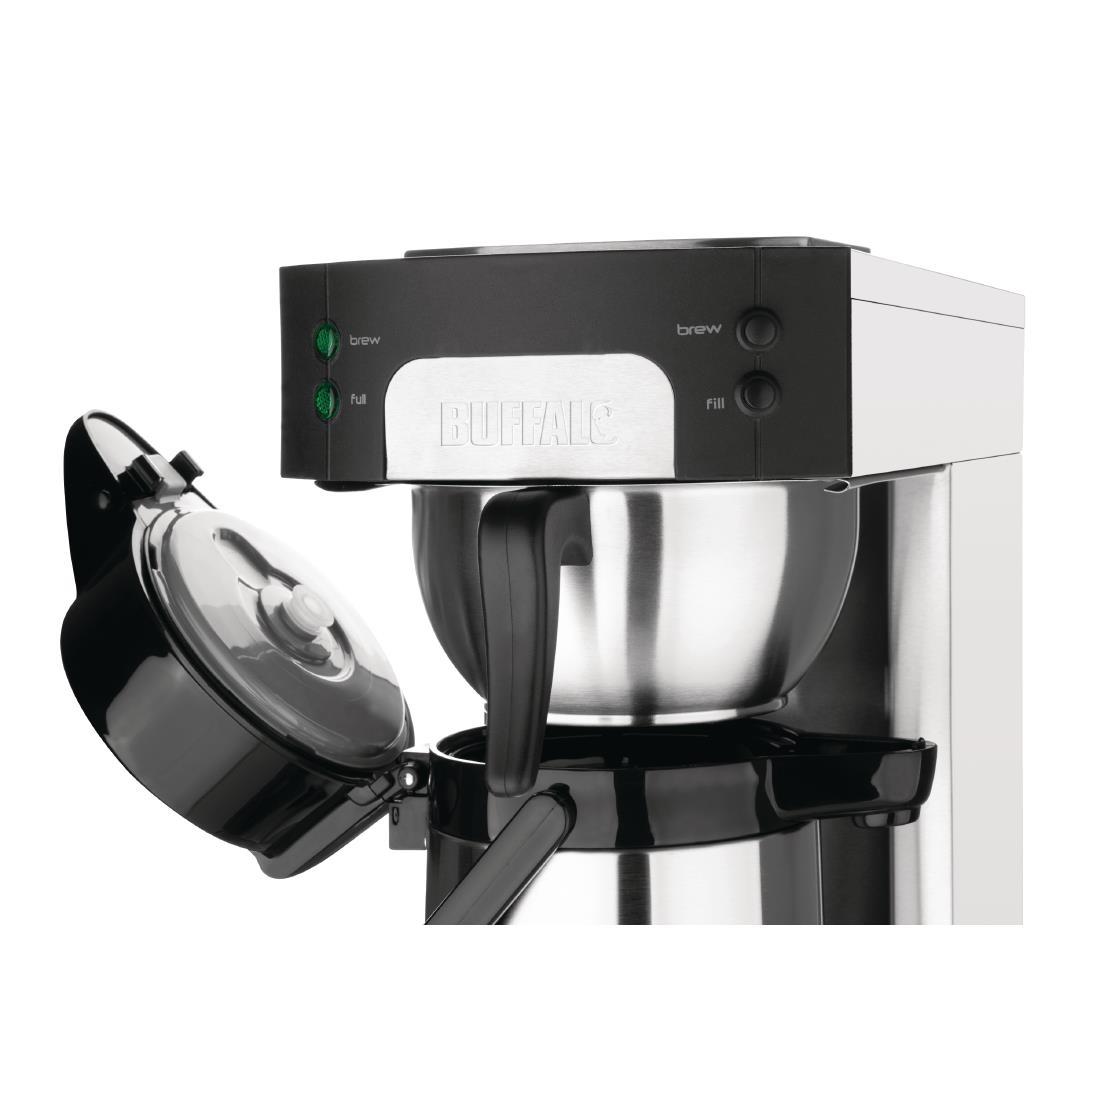 Buffalo Airpot Filter Coffee Maker - CW306  - 4